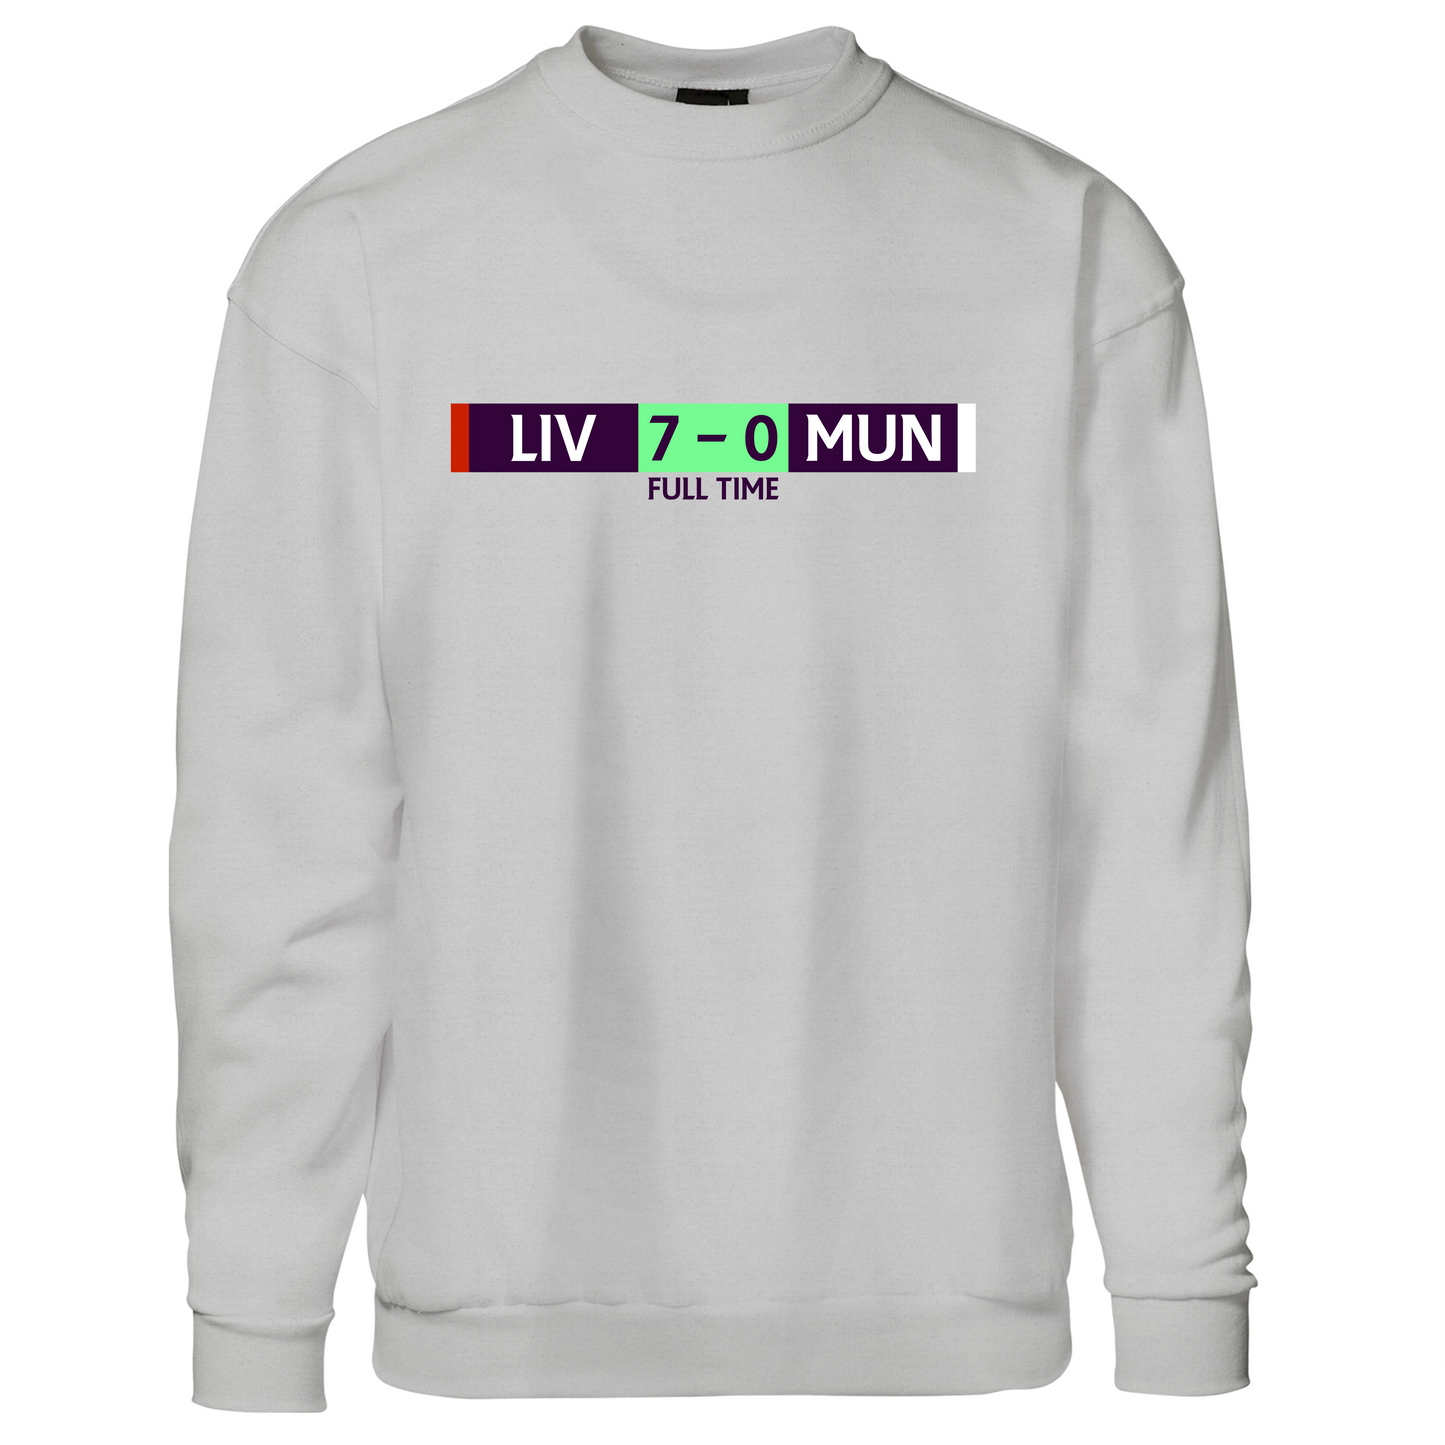 LIV 7-0 MUN - Sweatshirt